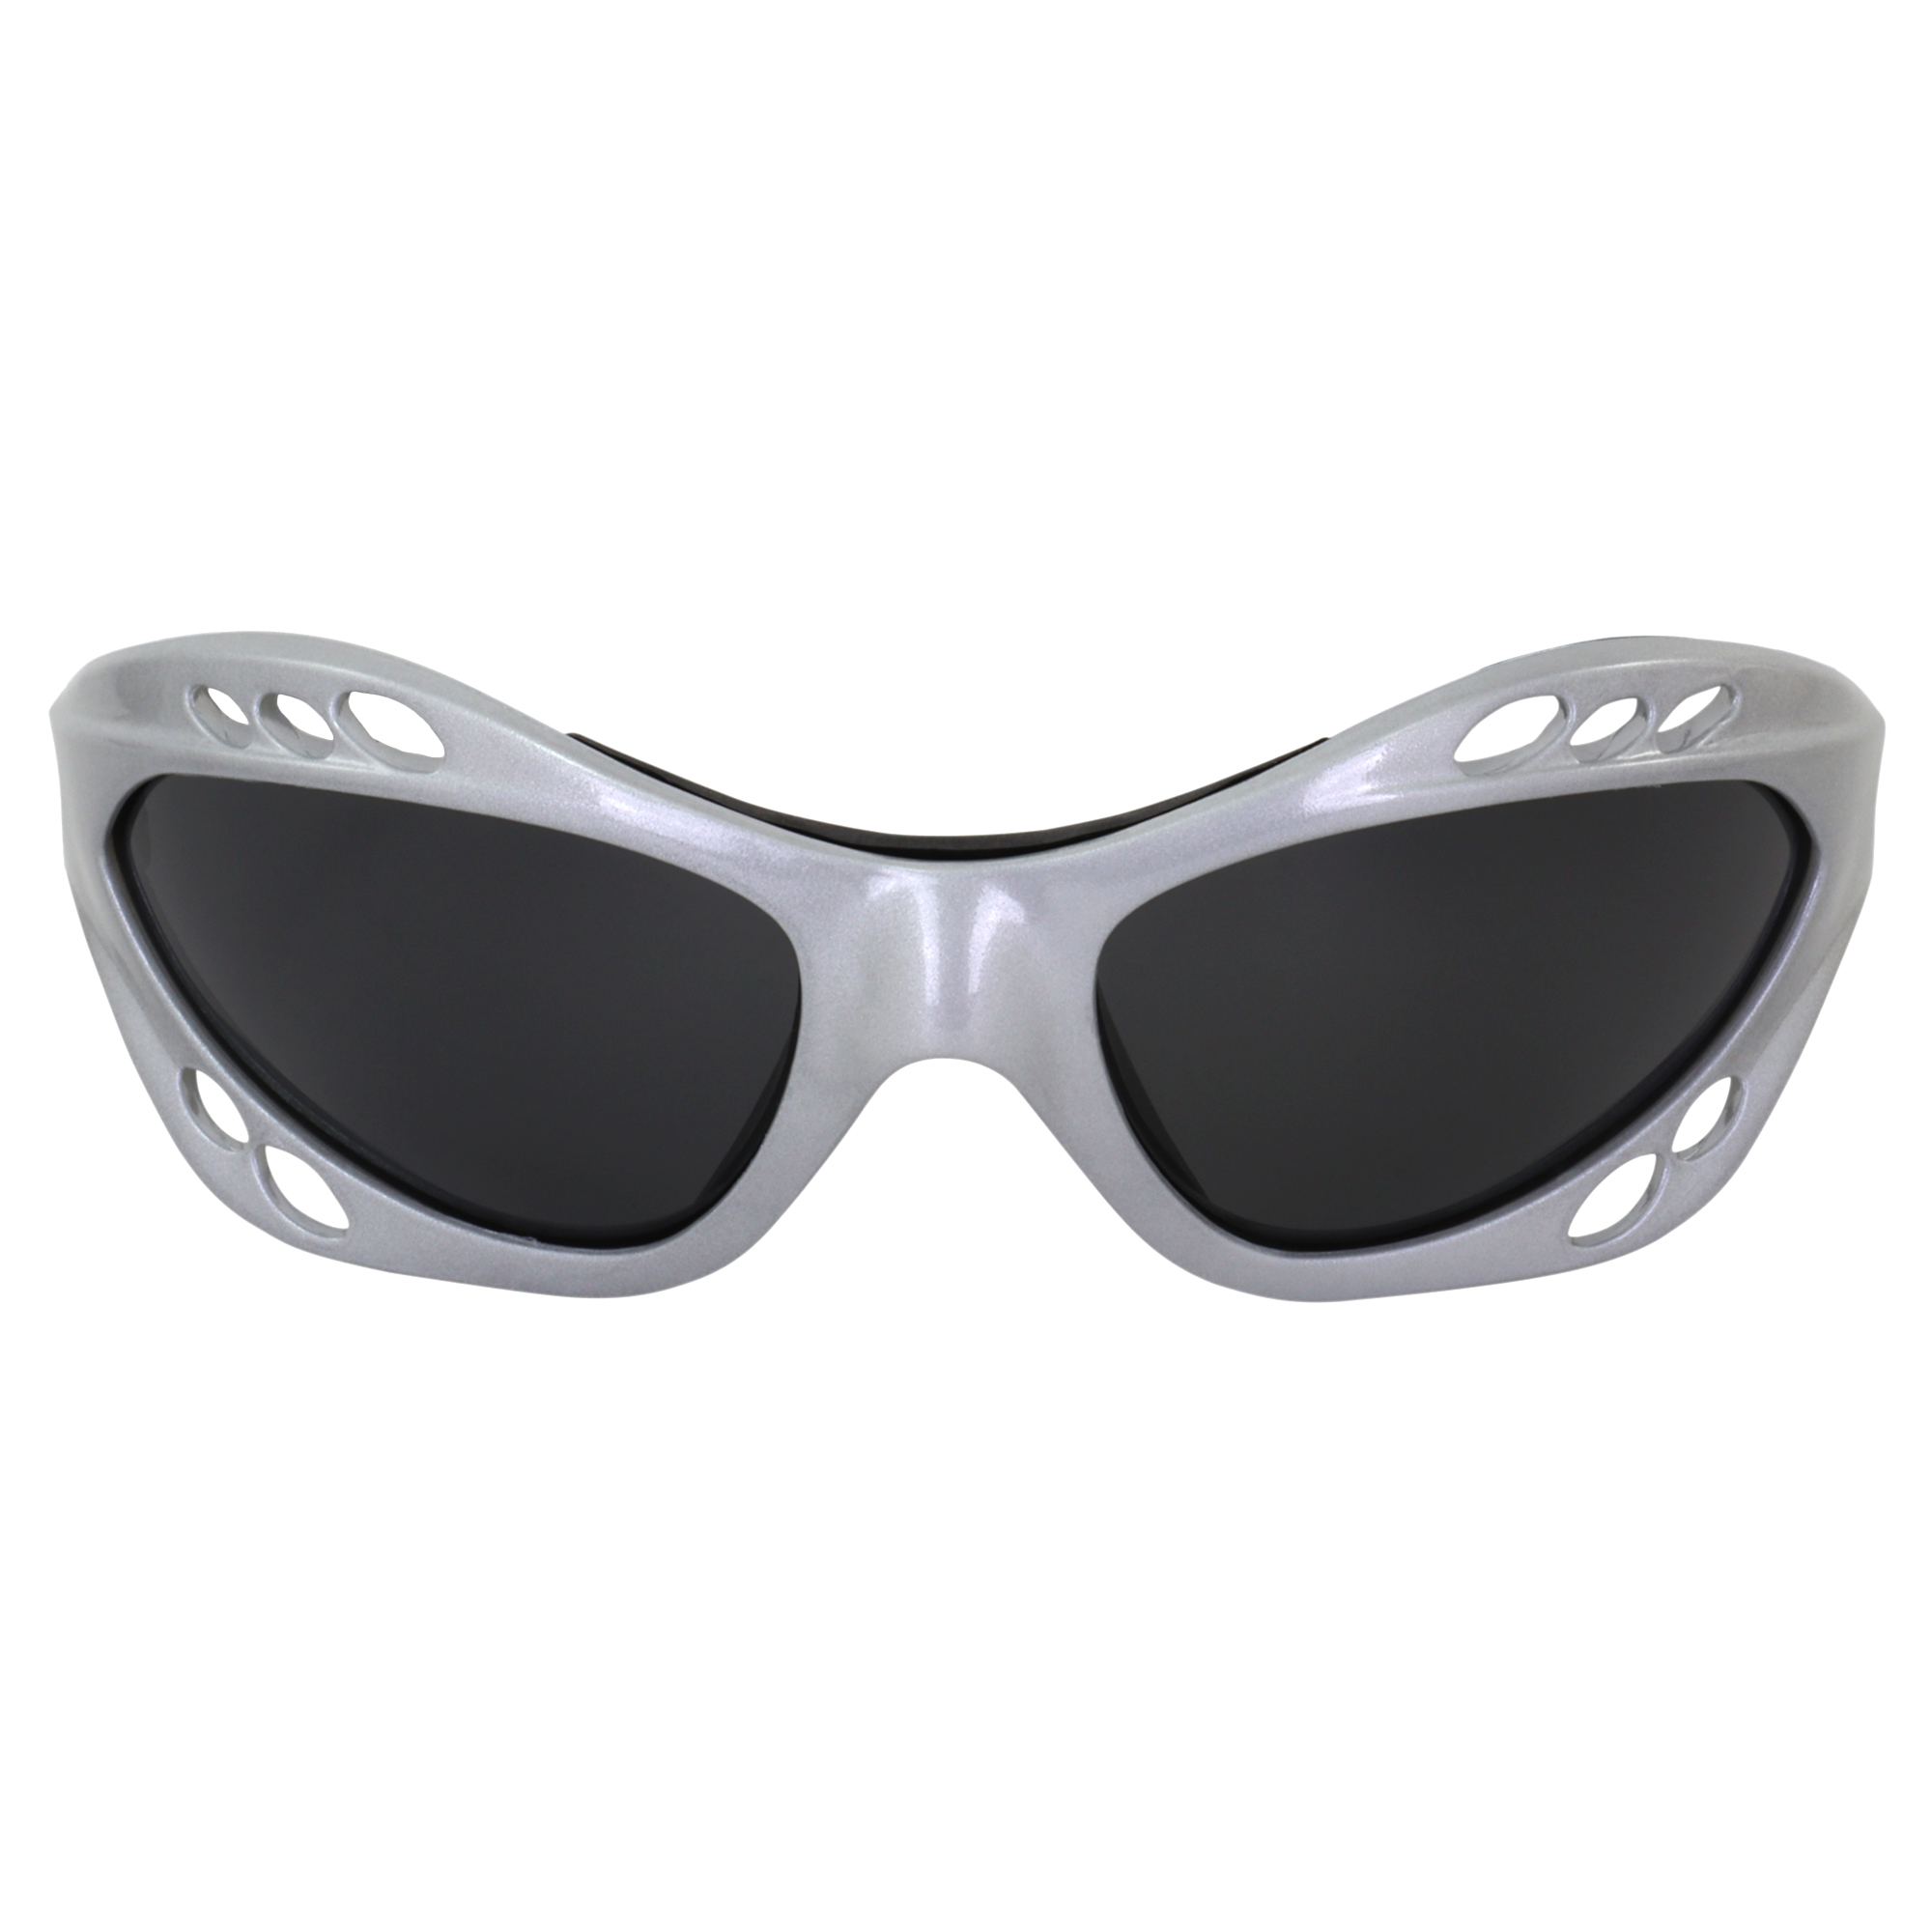 3 Pairs Birdz Seahawk Padded Polarized Sunglasses w/Strap Water Sports Surfing Kayaking Jetski Silver Frame w/Smoke Lens & Black Frame w/ Red & Green Mirror Lenses - image 2 of 7